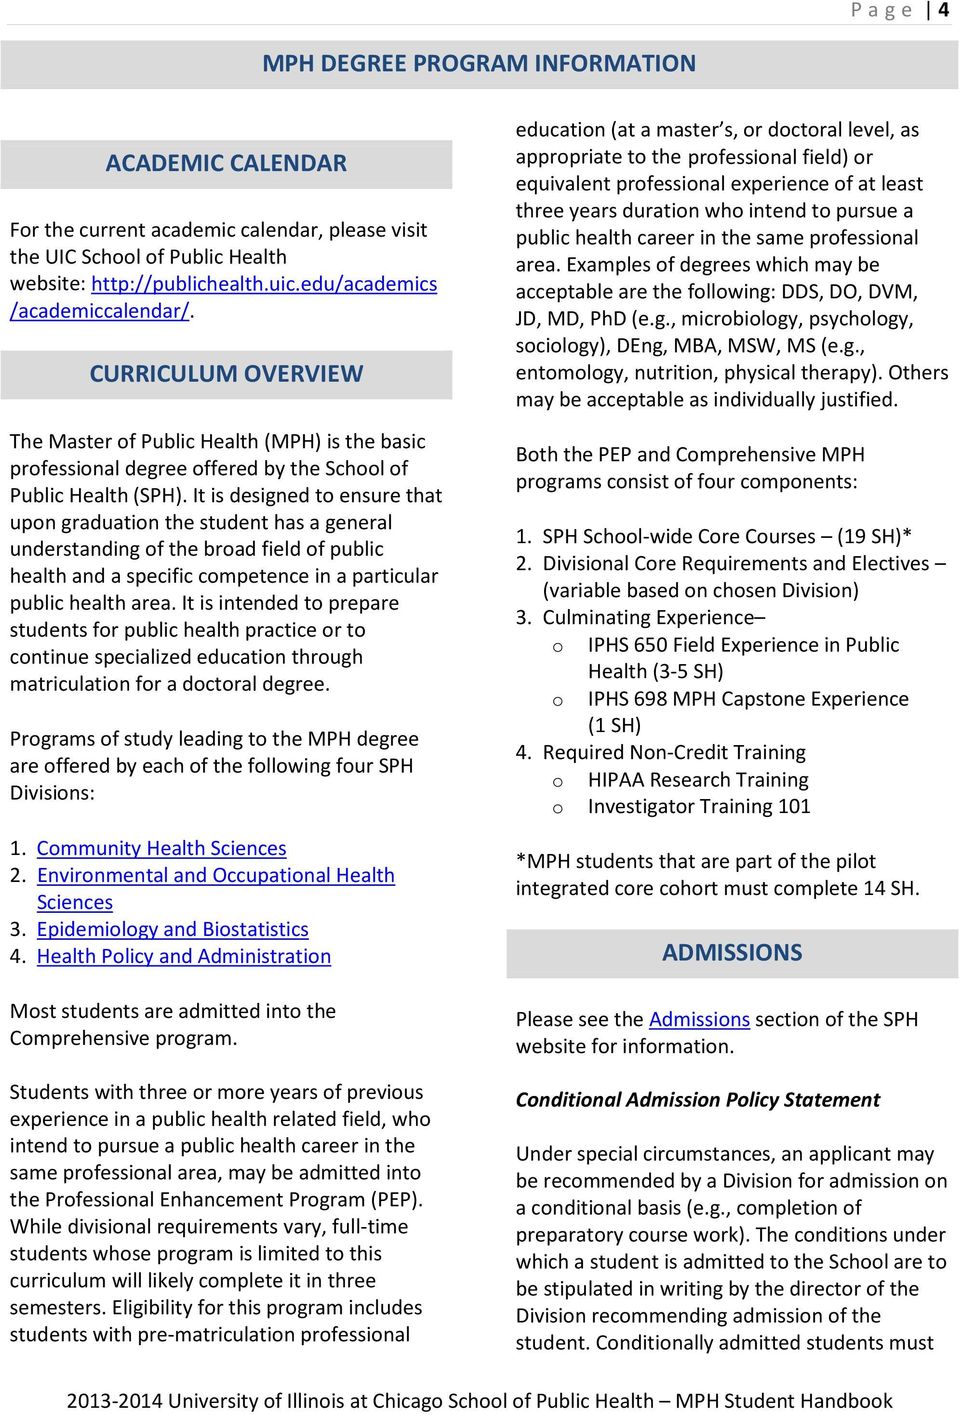 School Of Public Health Mph Degree Student Handbook Pdf Free Download